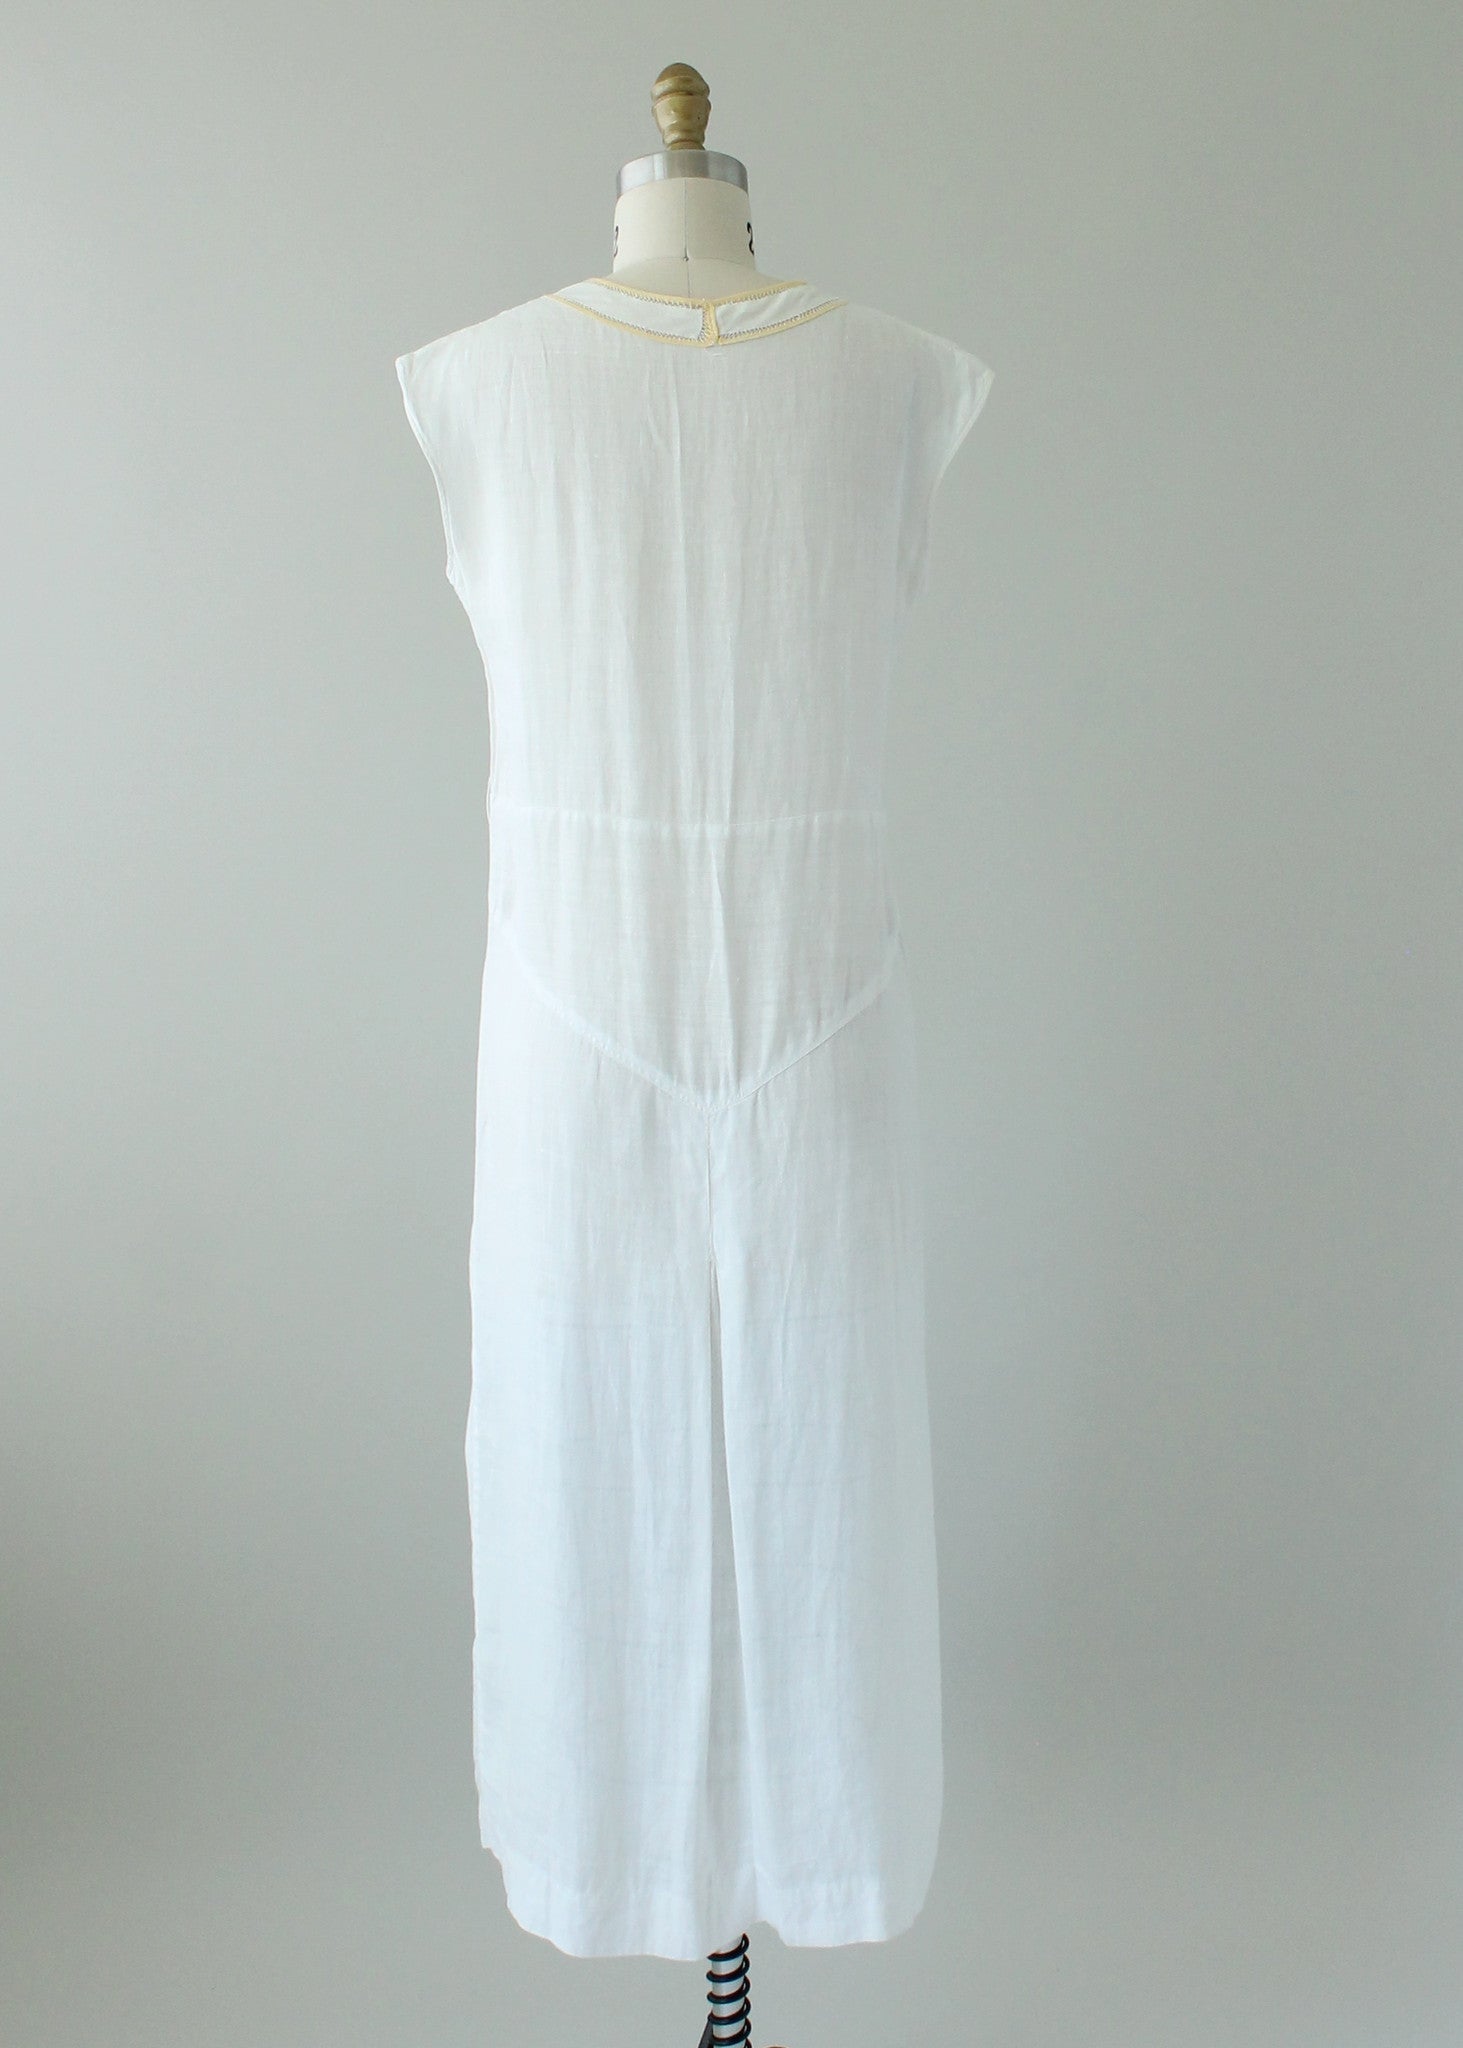 vintage white summer dress